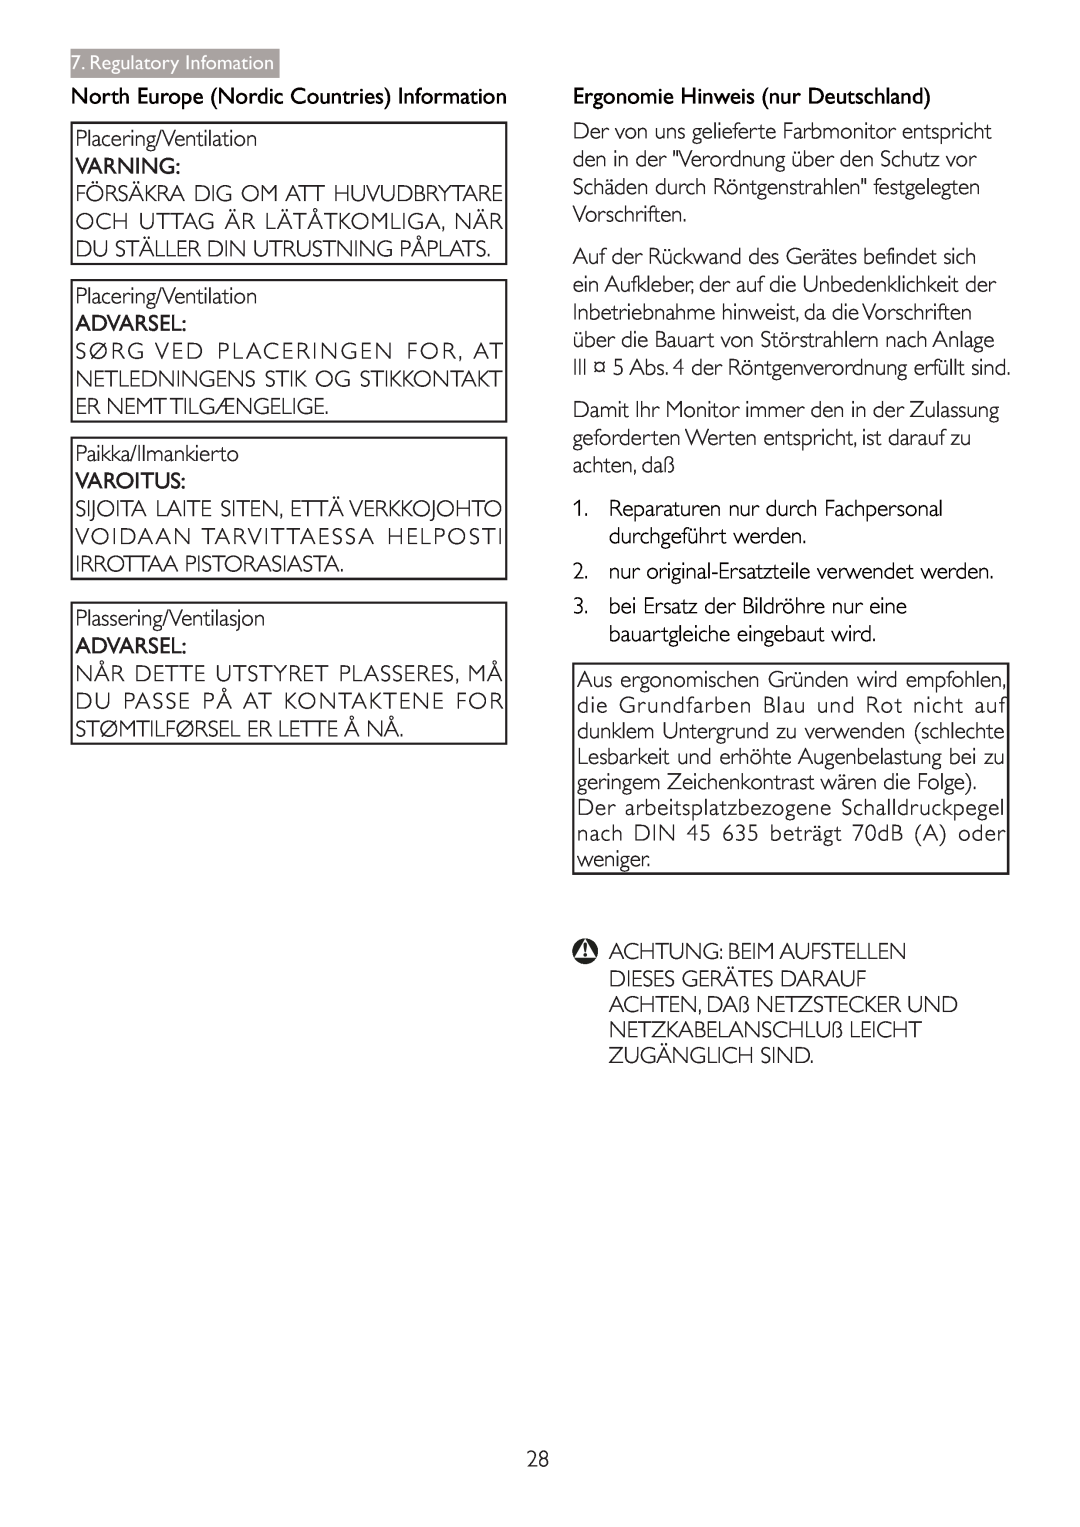 Philips 2.47E+06 user manual North Europe Nordic Countries Information, Ergonomie Hinweis nur Deutschland 